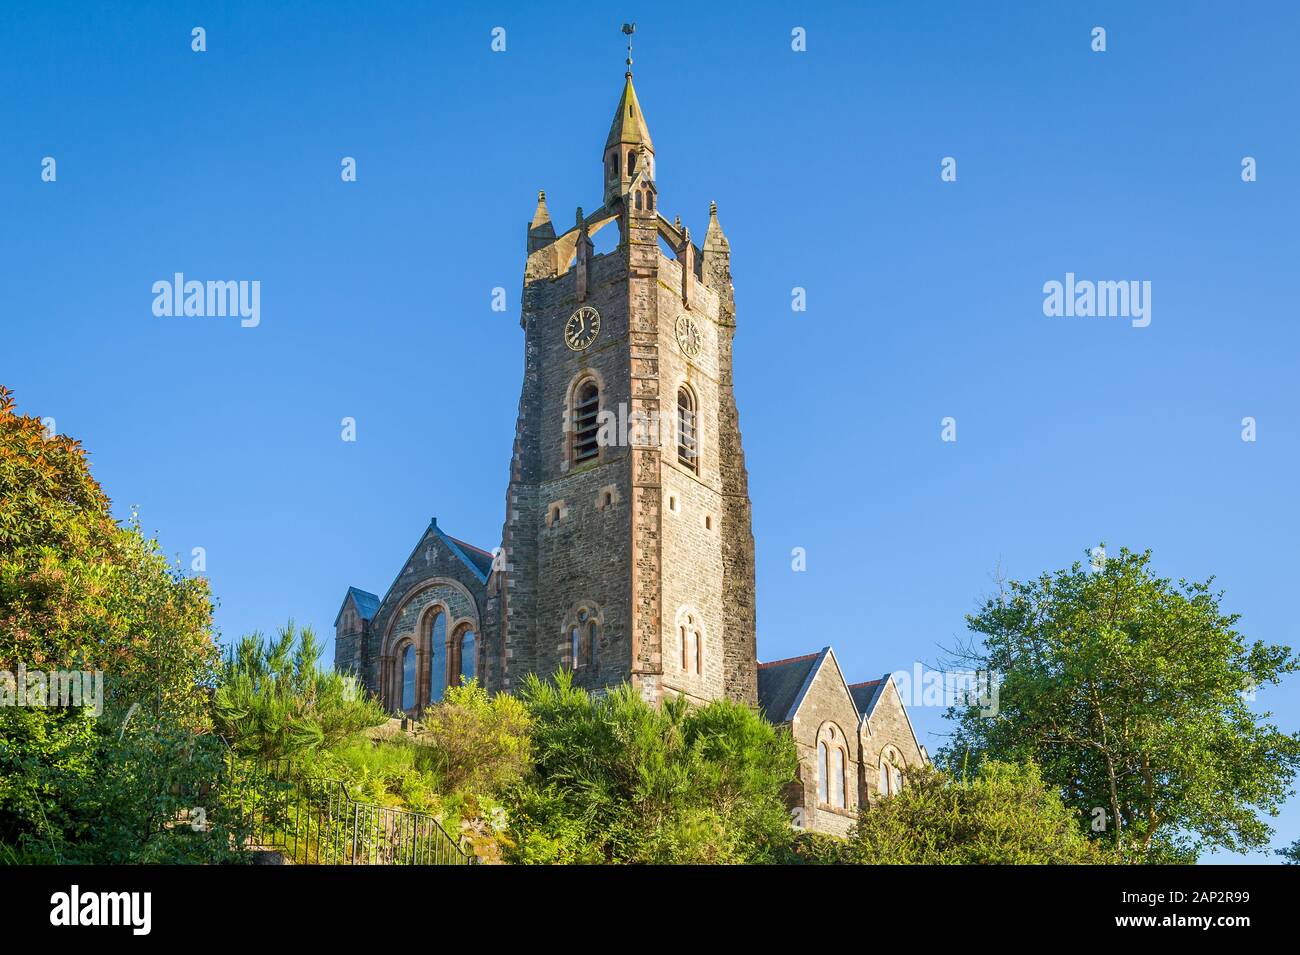 Parish Church tower on the hills of Tarbert. Landmarks of Scotland. Stock Photo